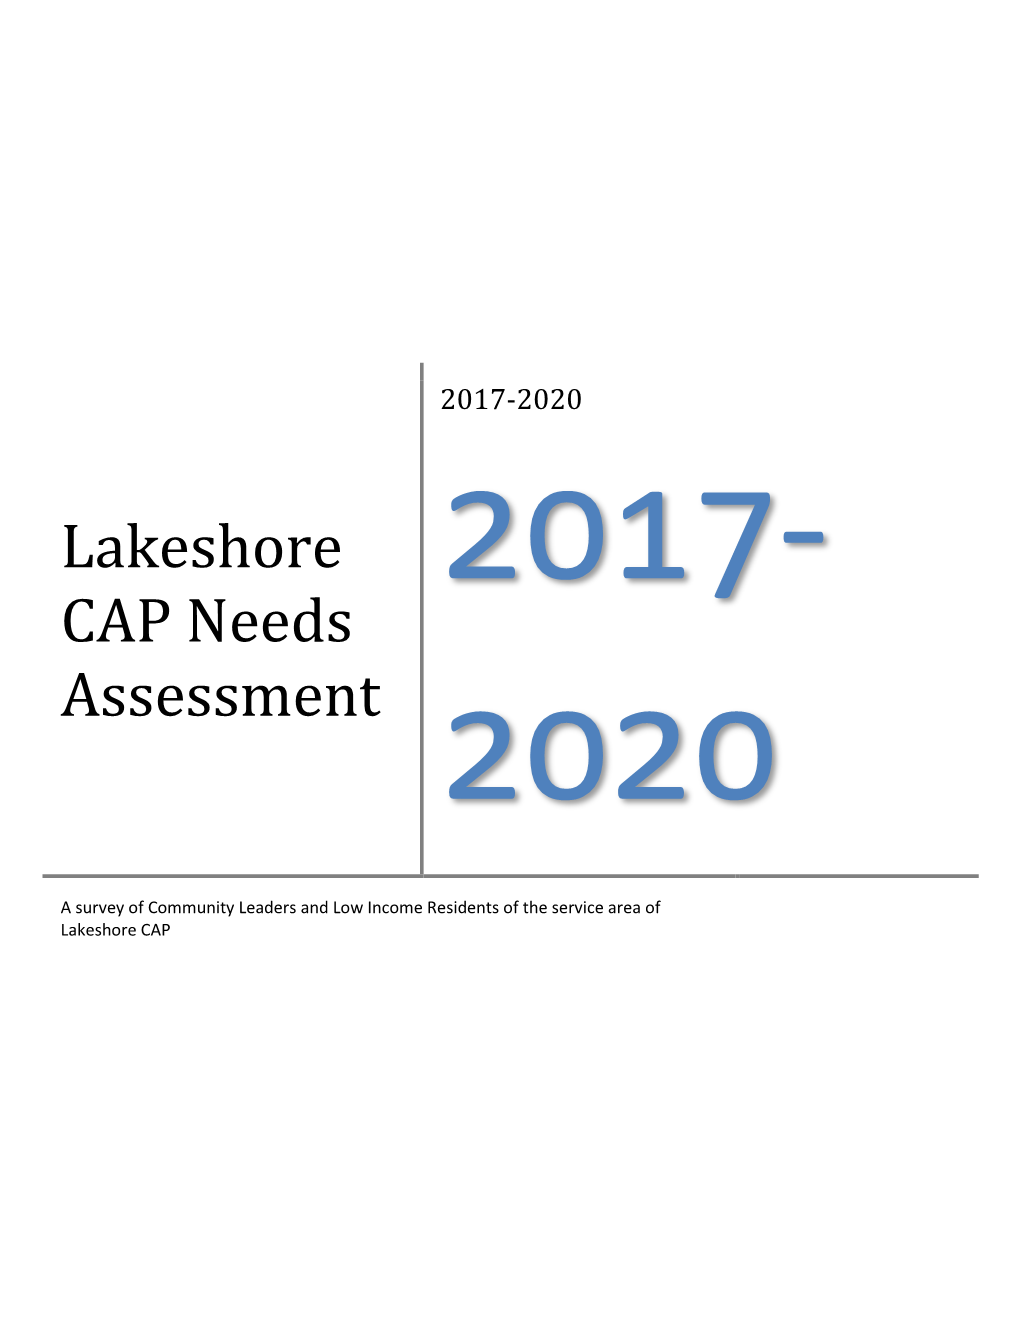 Lakeshore CAP Needs Assessment 2017- 2020